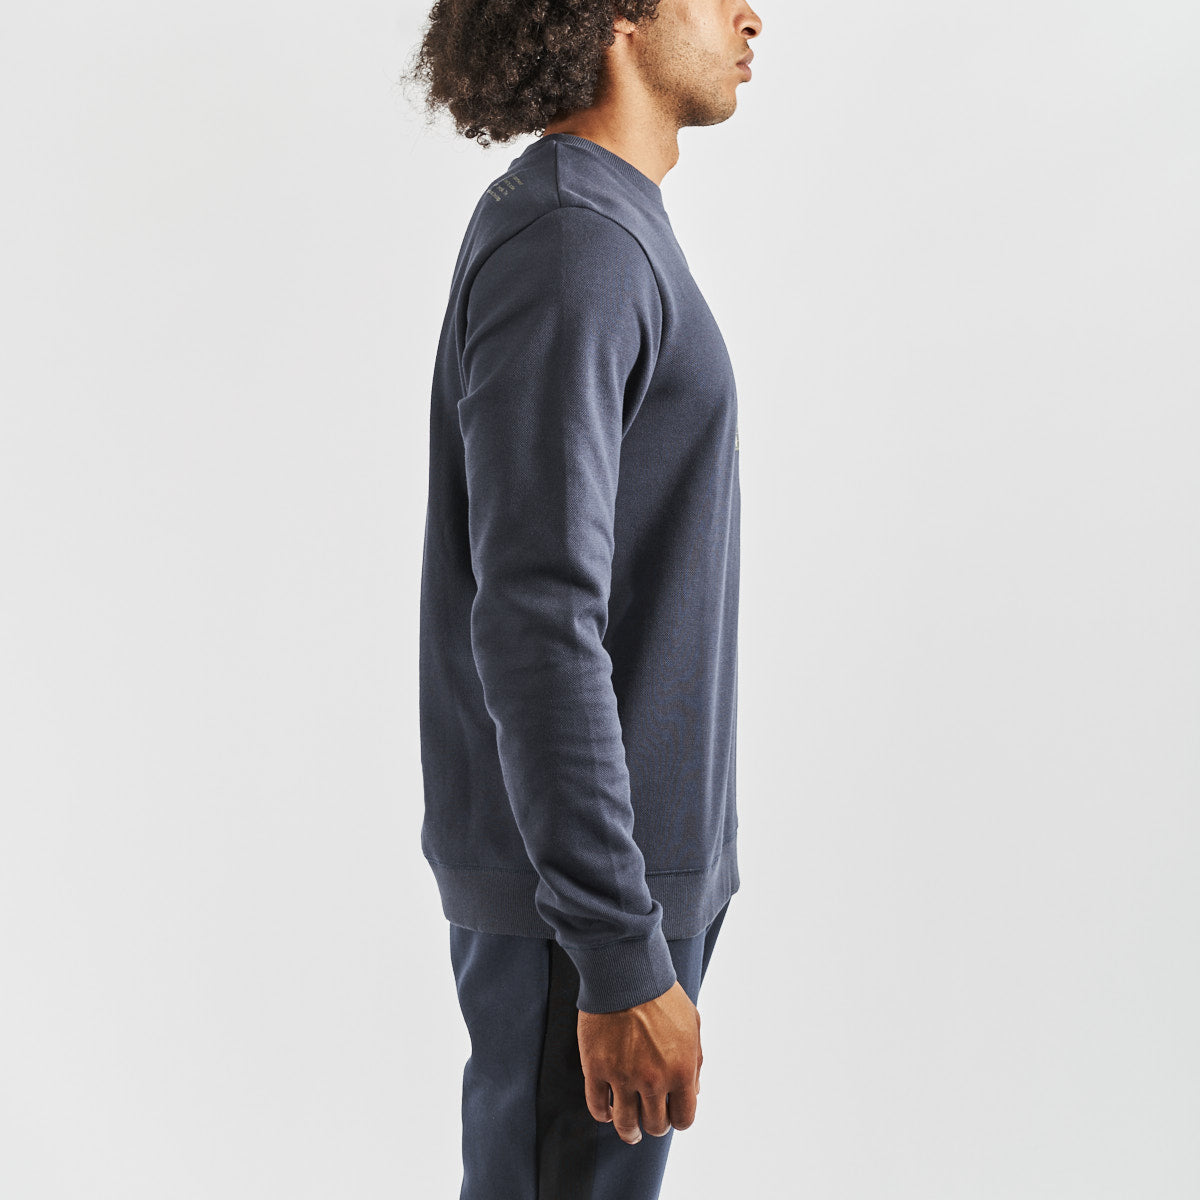 Sweatshirt Isoa Bleu homme - image 3